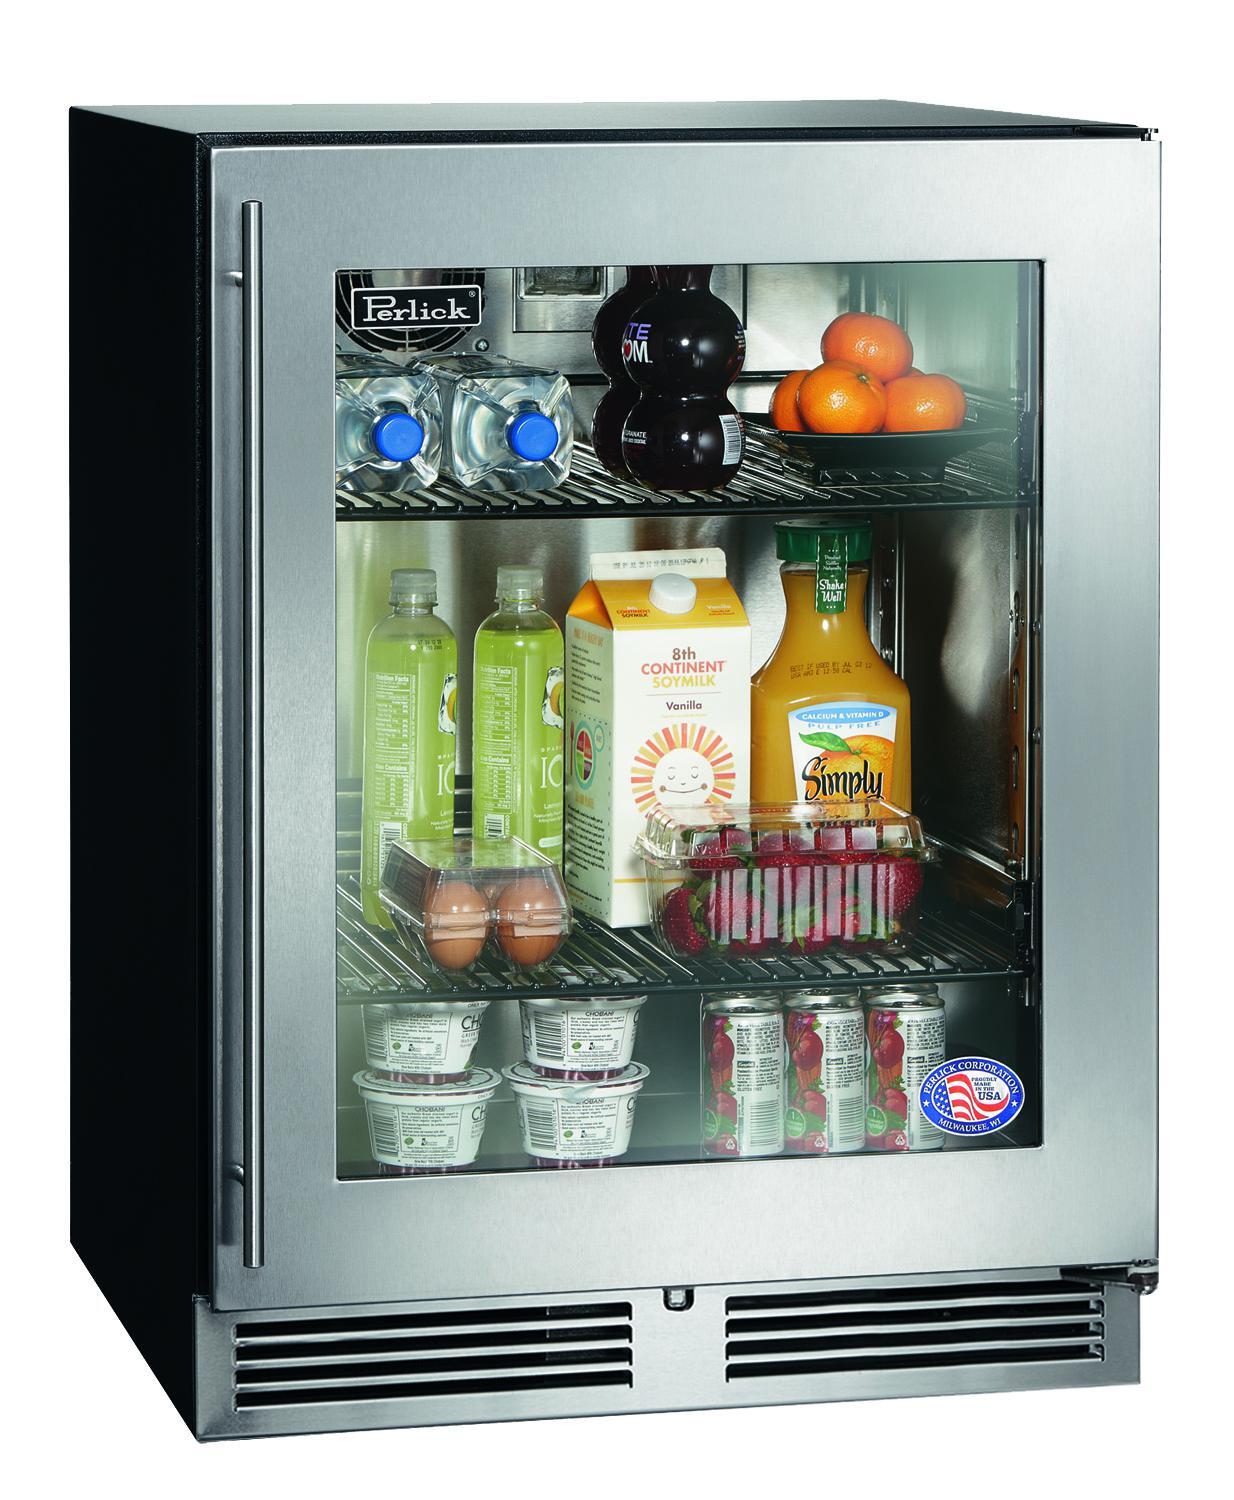 Perlick HA24RB43R 24" Ada Compliant Refrigerator